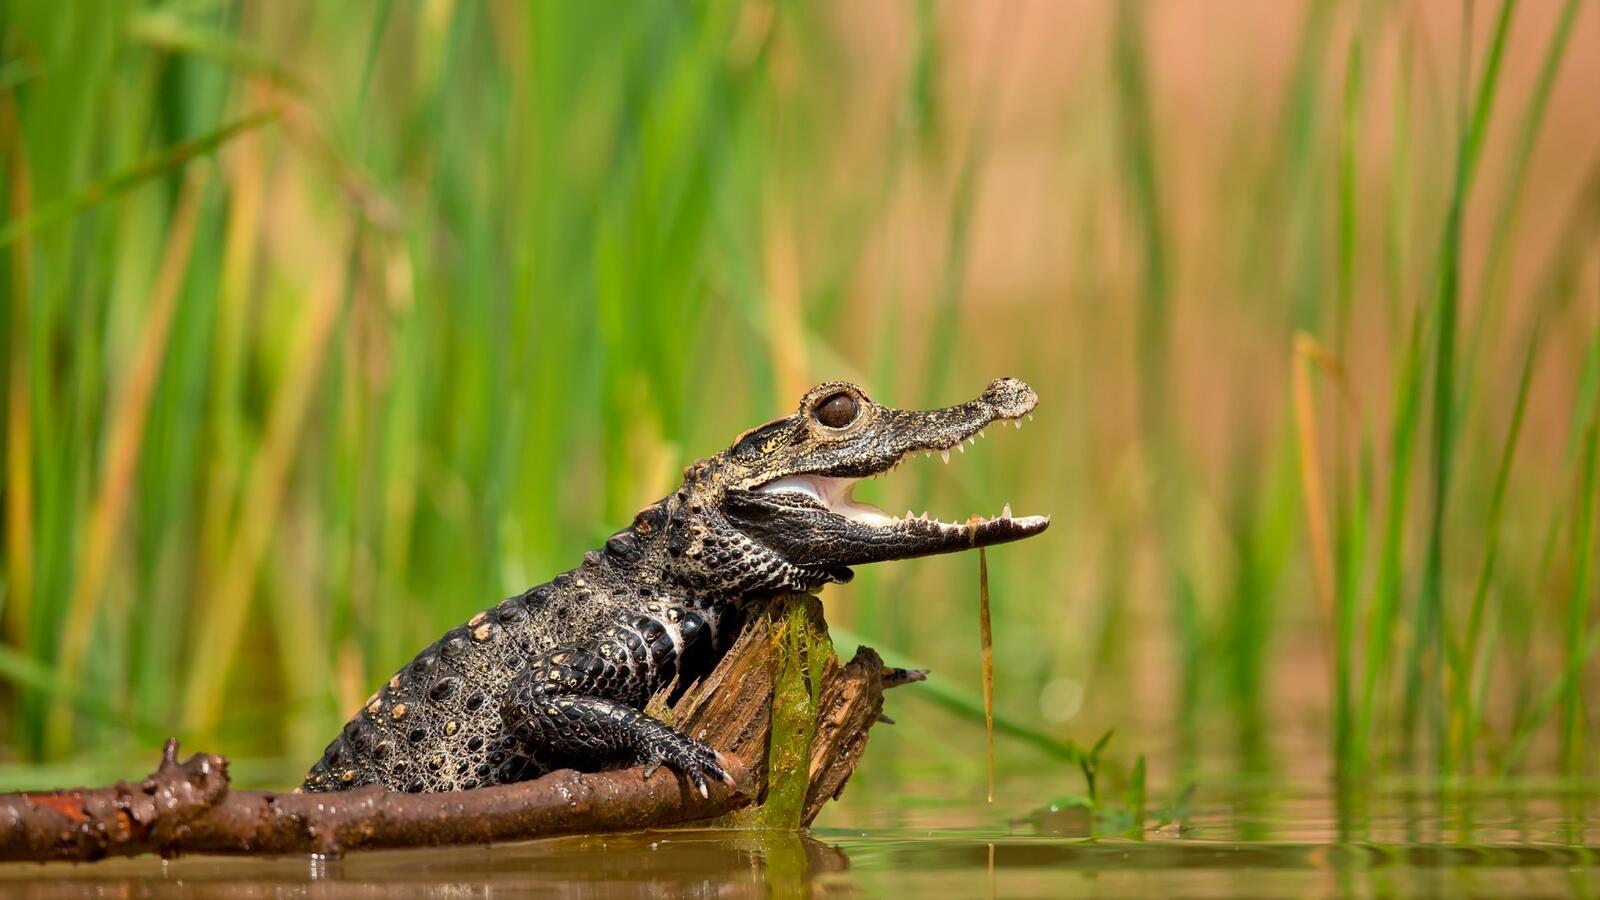 Wallpapers baby animals crocodiles reptile on the desktop